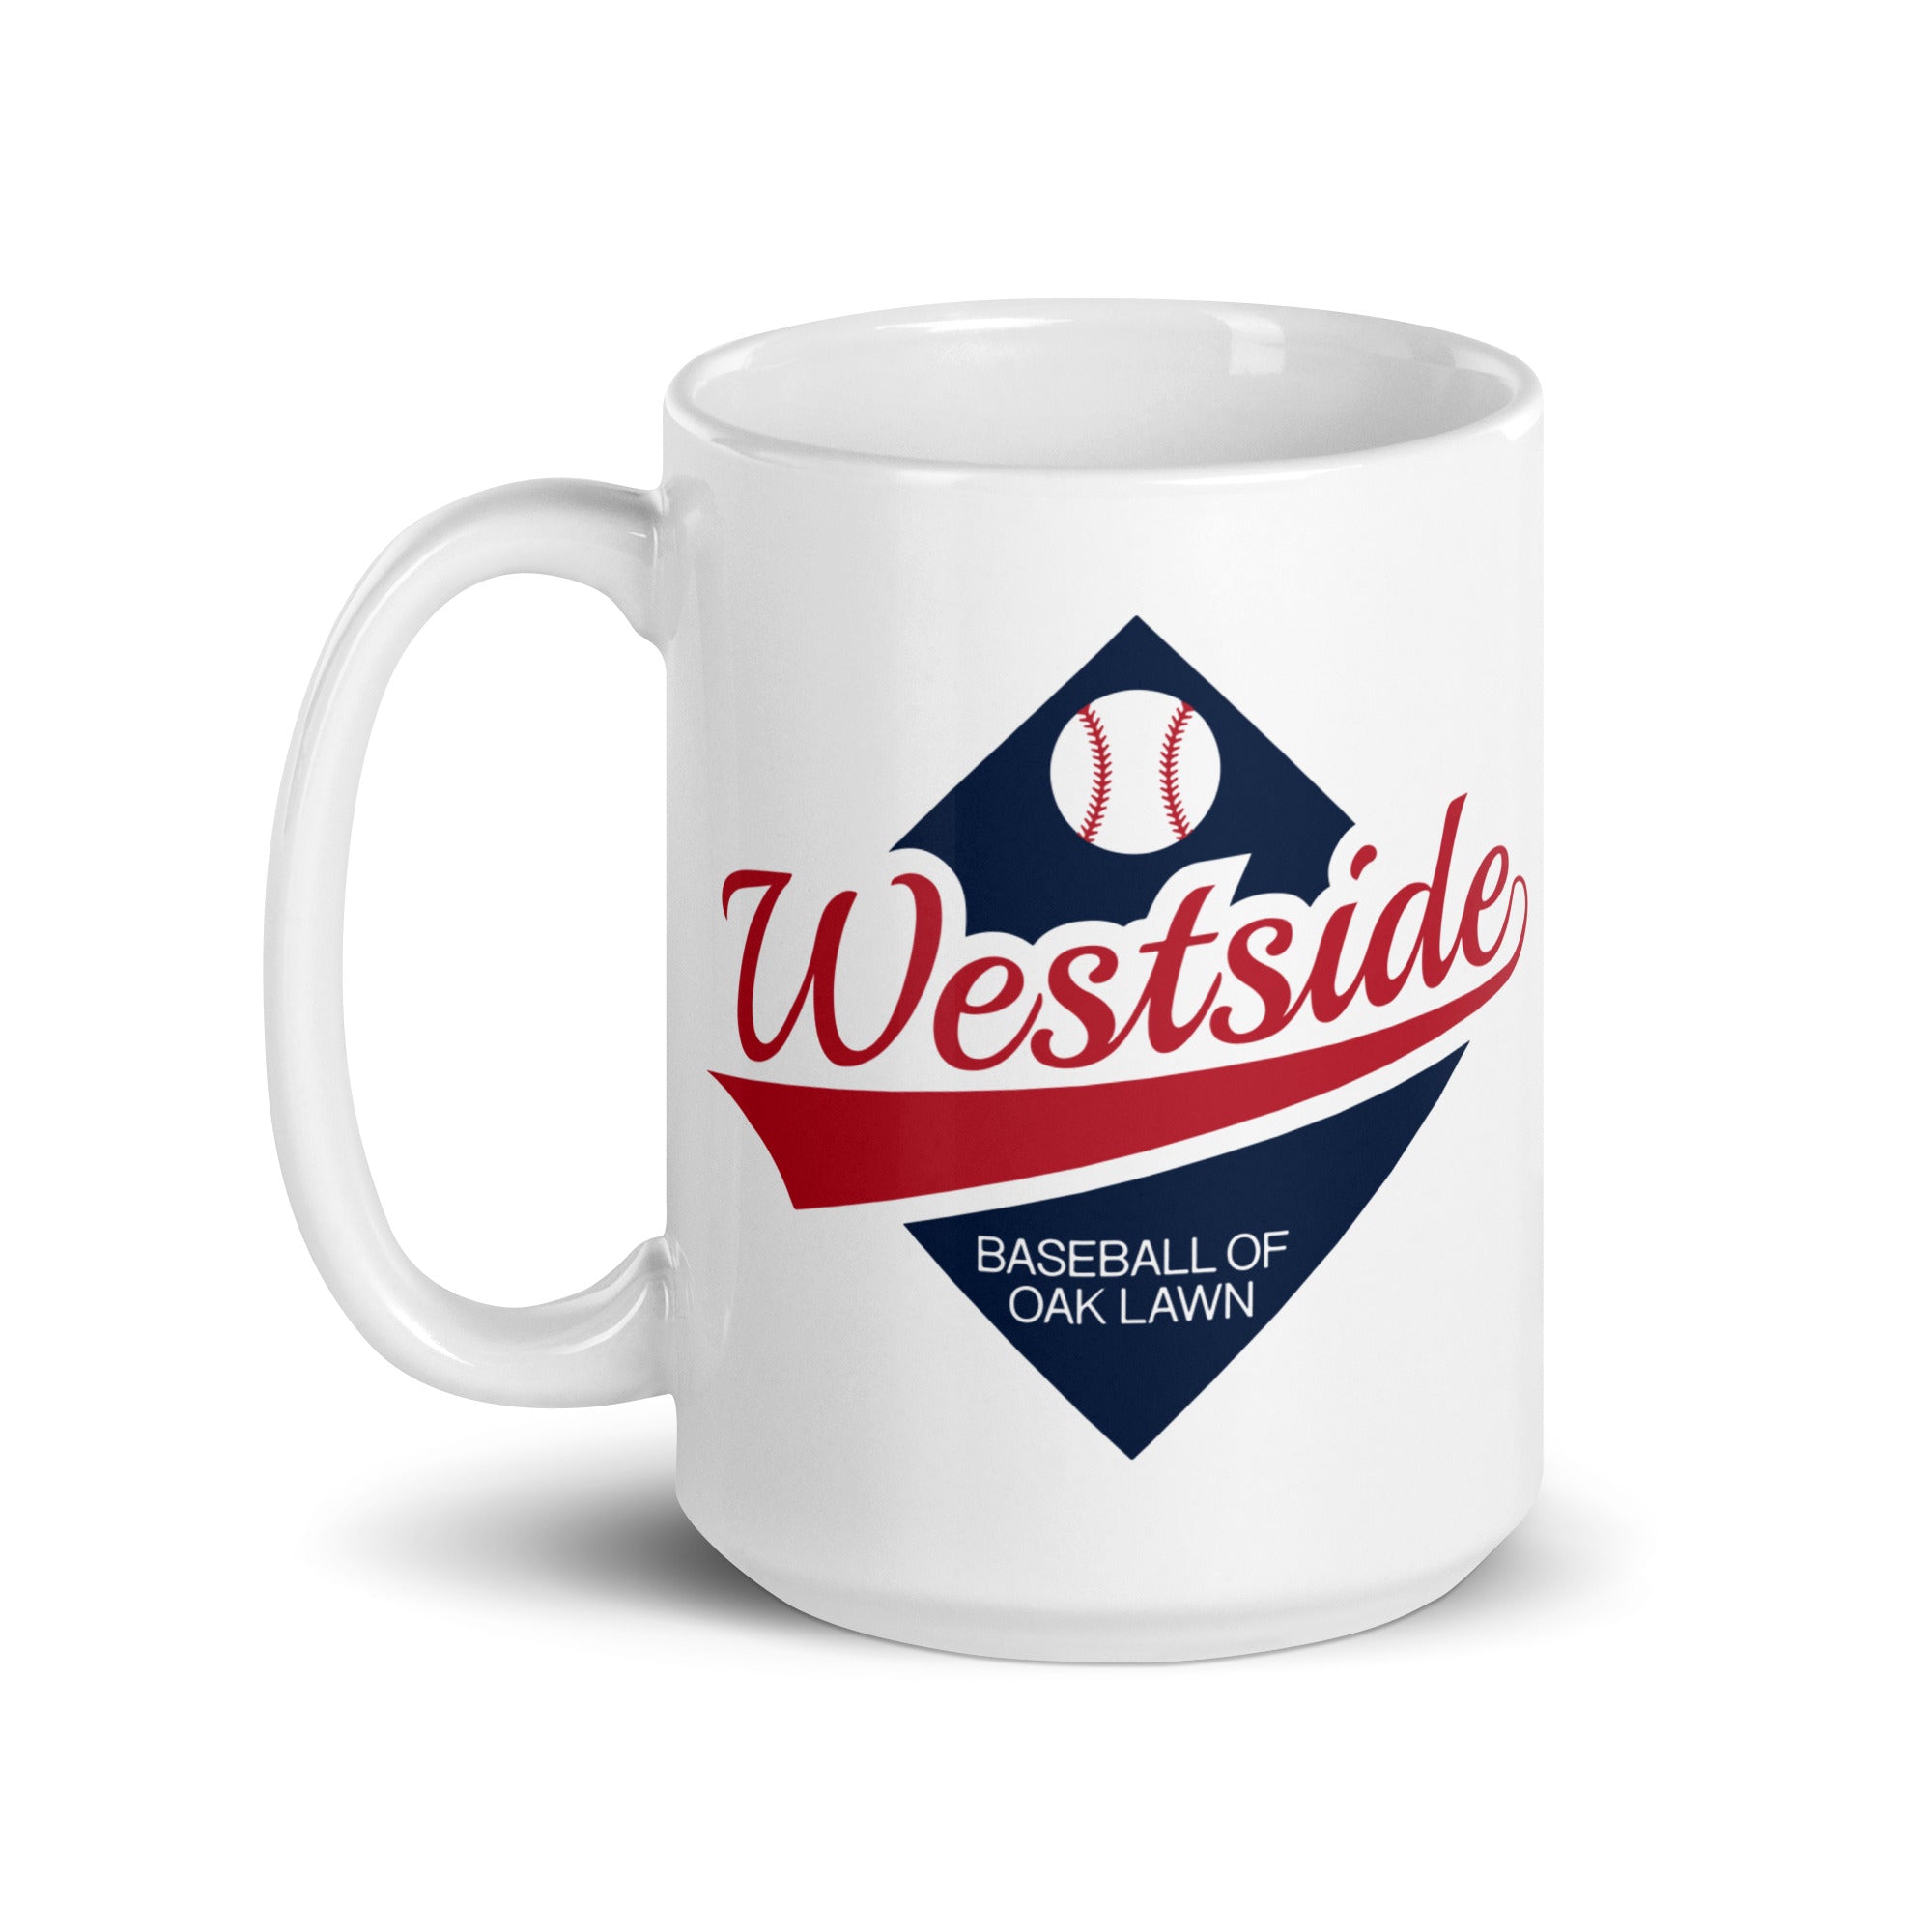 WBOL White glossy mug